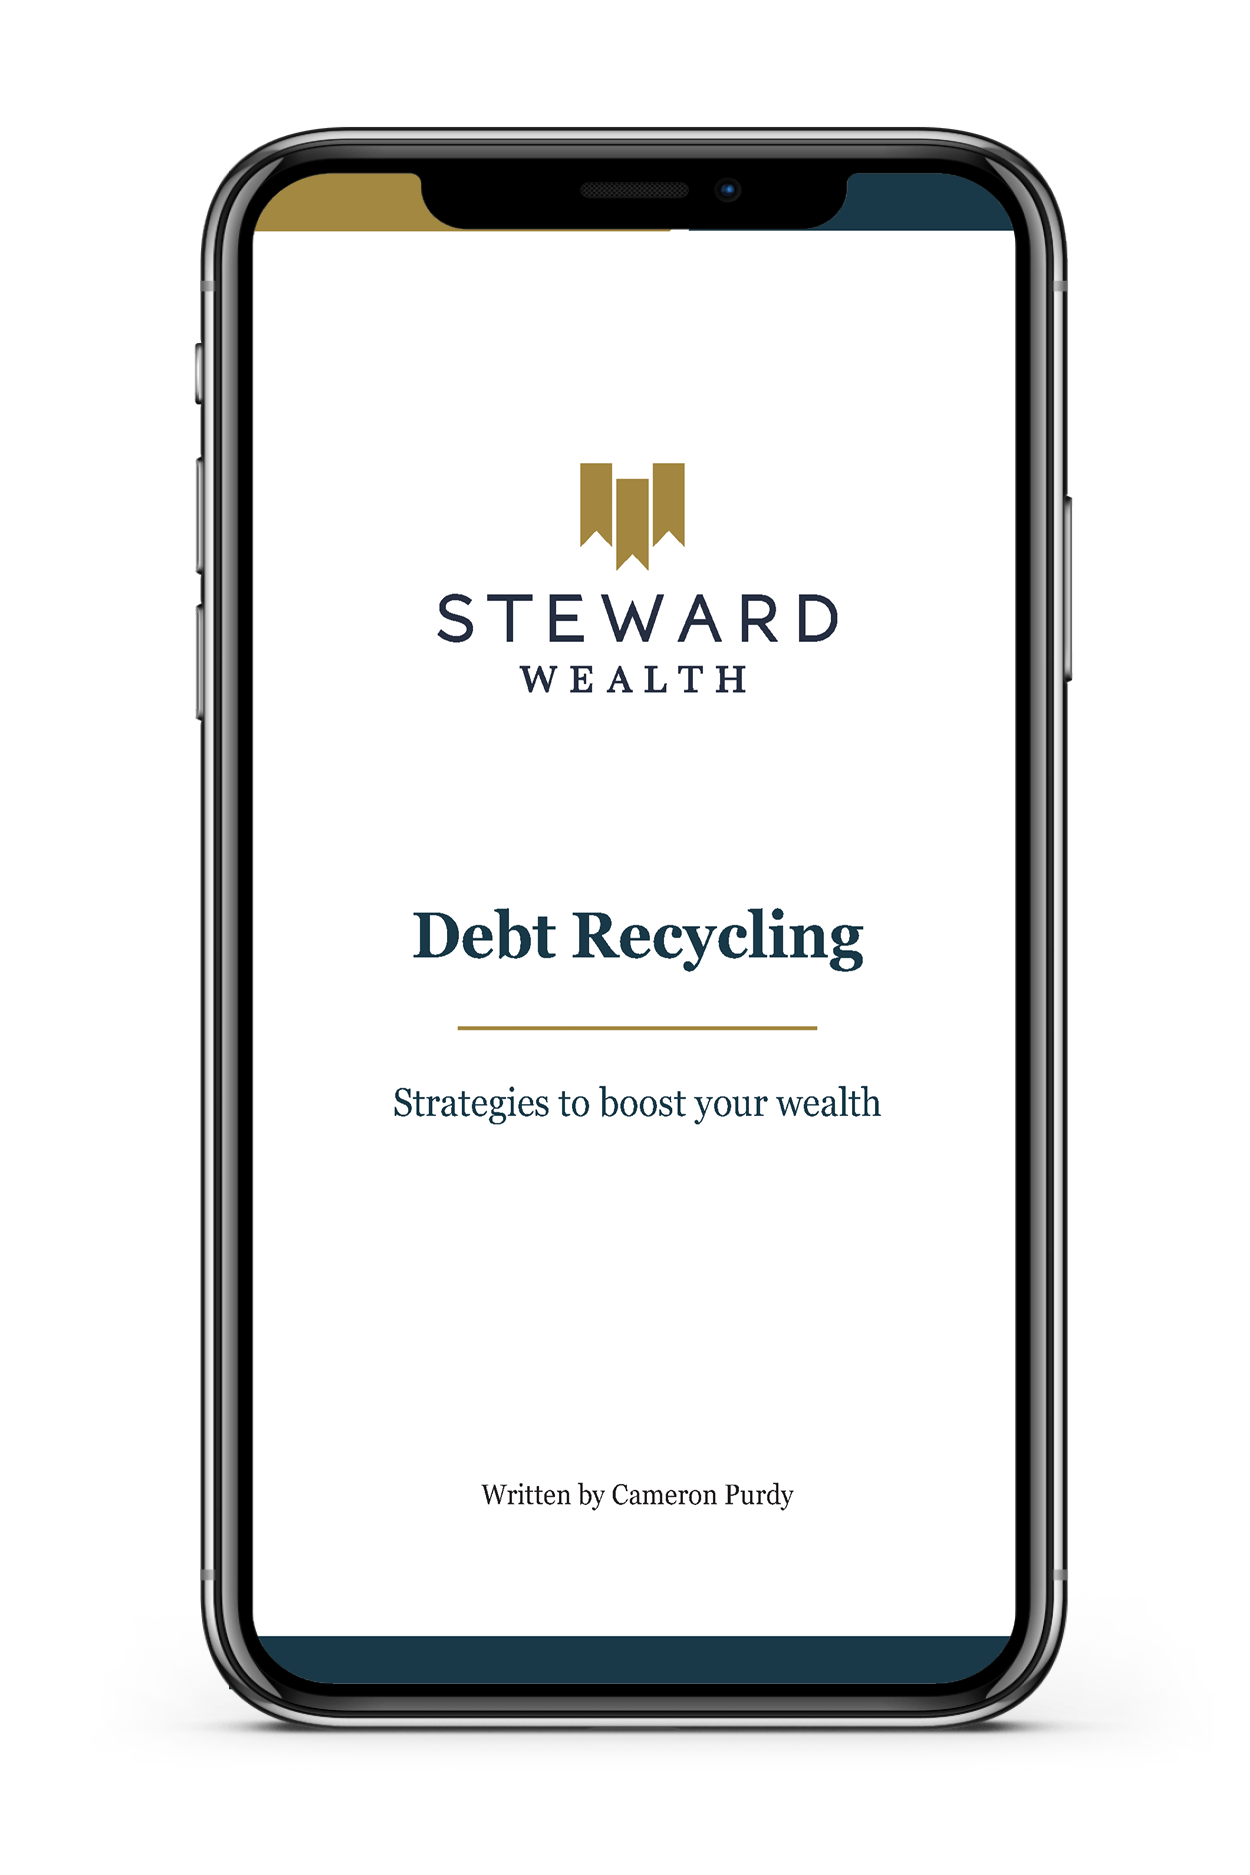 debt recycling ebook iphone image